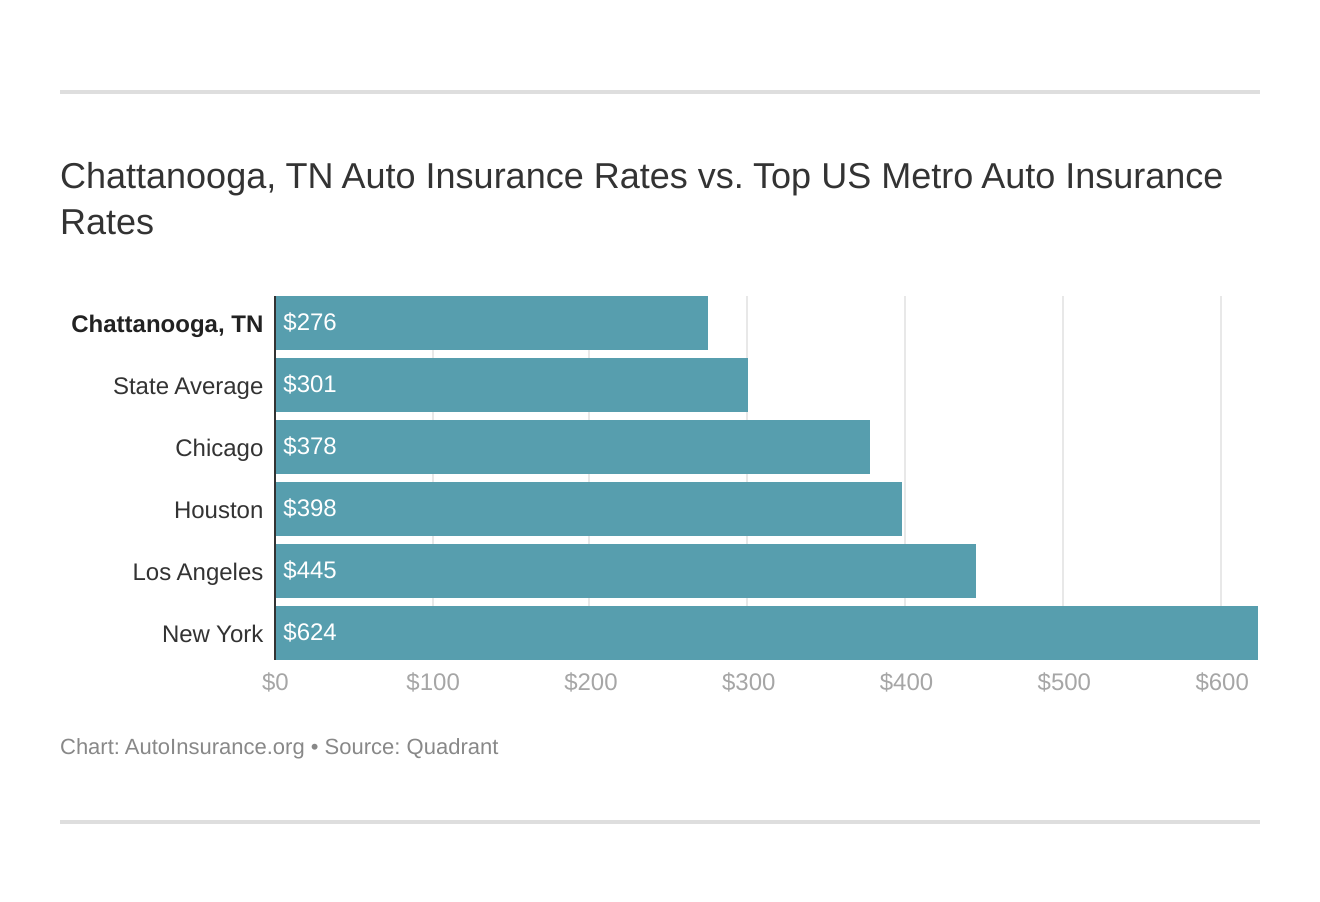 Chattanooga, TN Auto Insurance Rates vs. Top US Metro Auto Insurance Rates